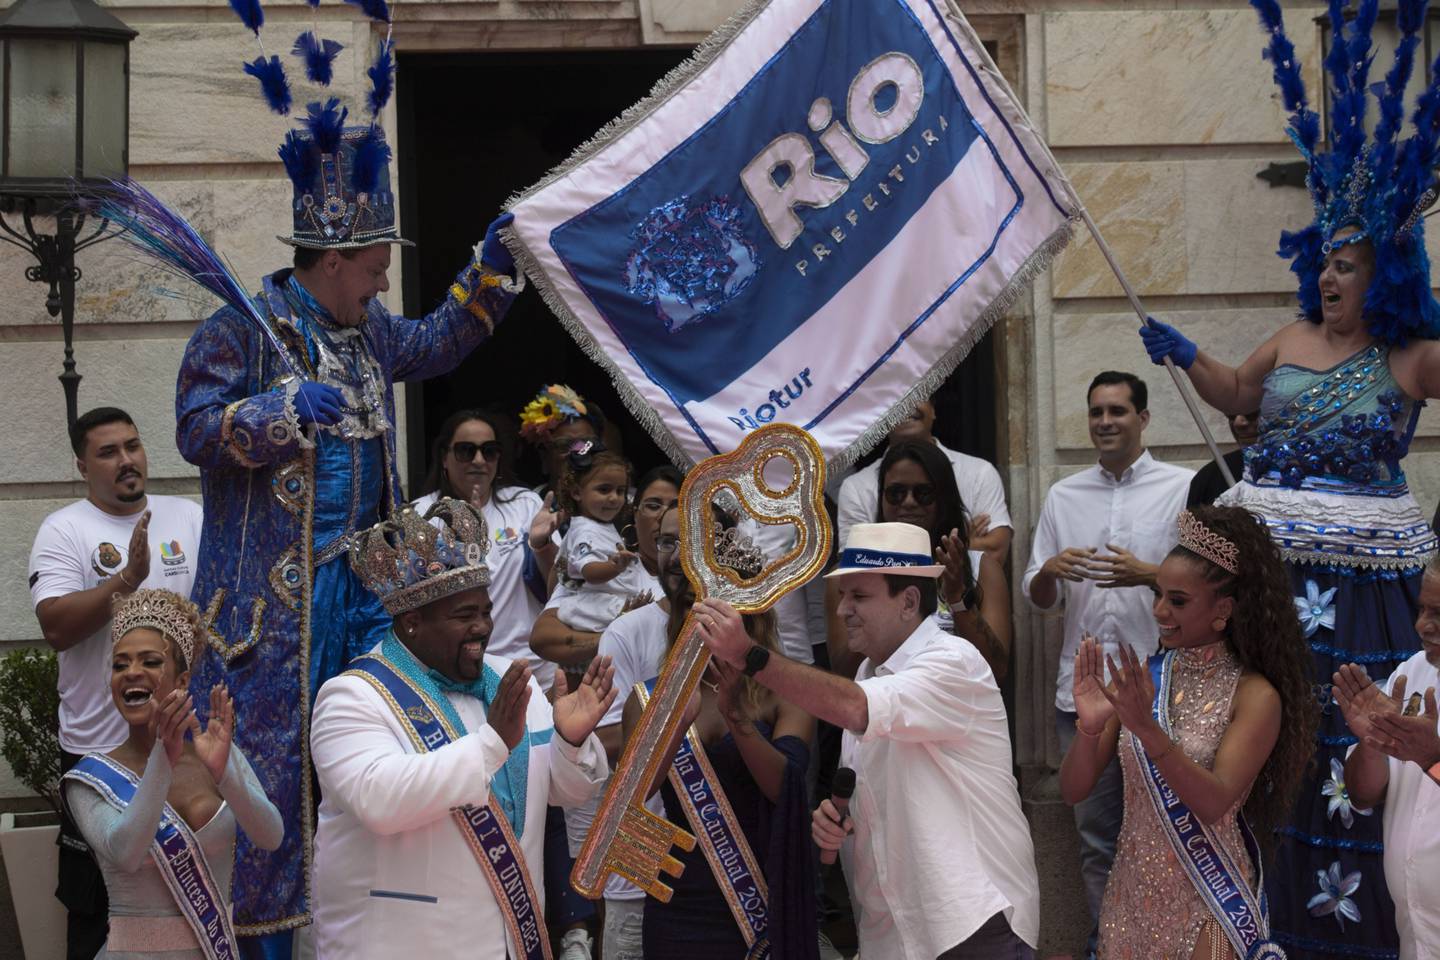 Rio de Janeiro's Mayor Eduardo Paes hands the keys to the city to Momo King during Carnivaldfd